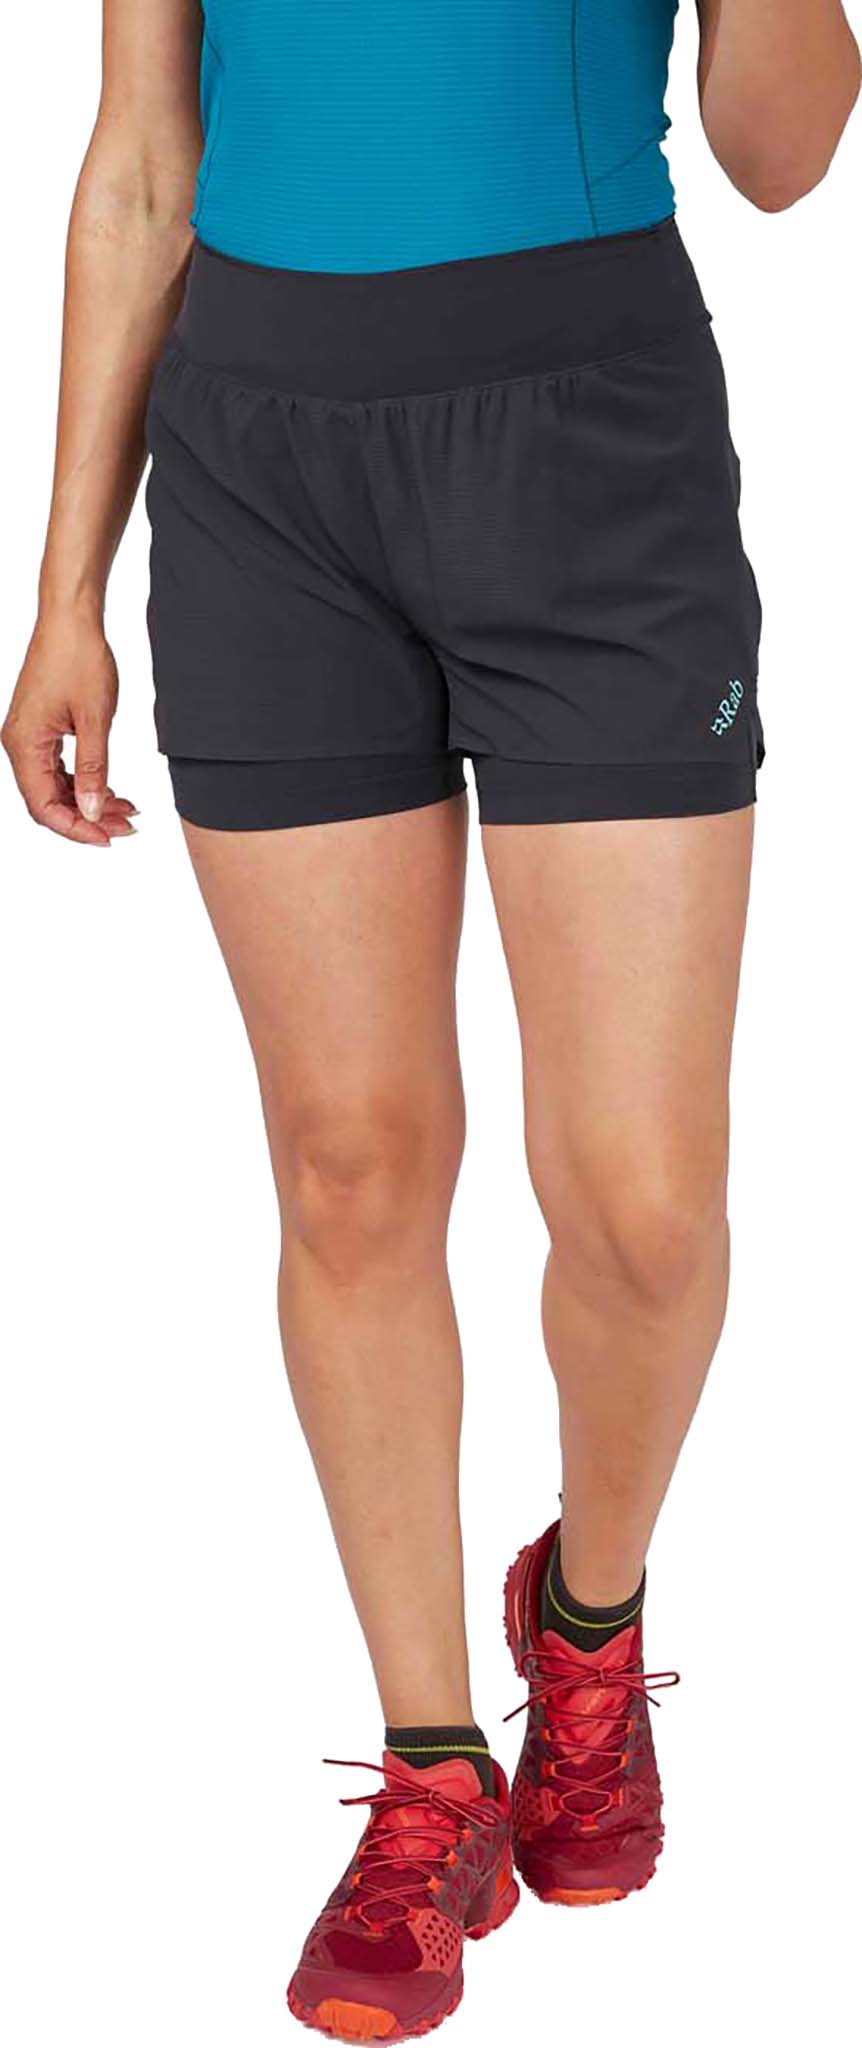 Rab Talus Ultra Shorts - Running shorts Women's, Buy online